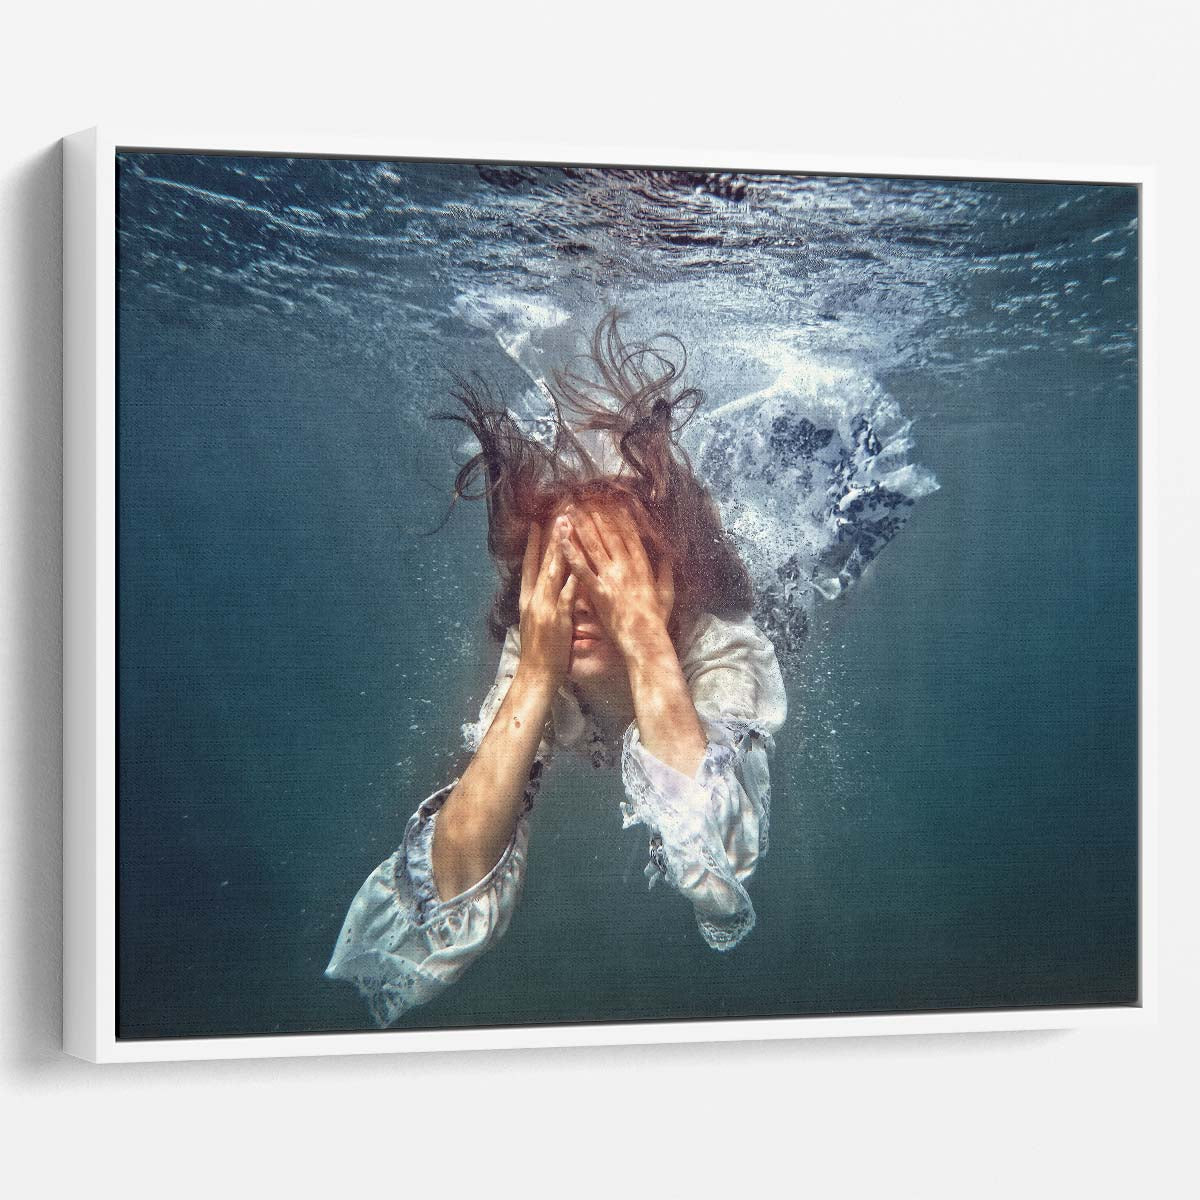 Vintage Underwater Ballet Female Swimmer Wall Art by Luxuriance Designs. Made in USA.